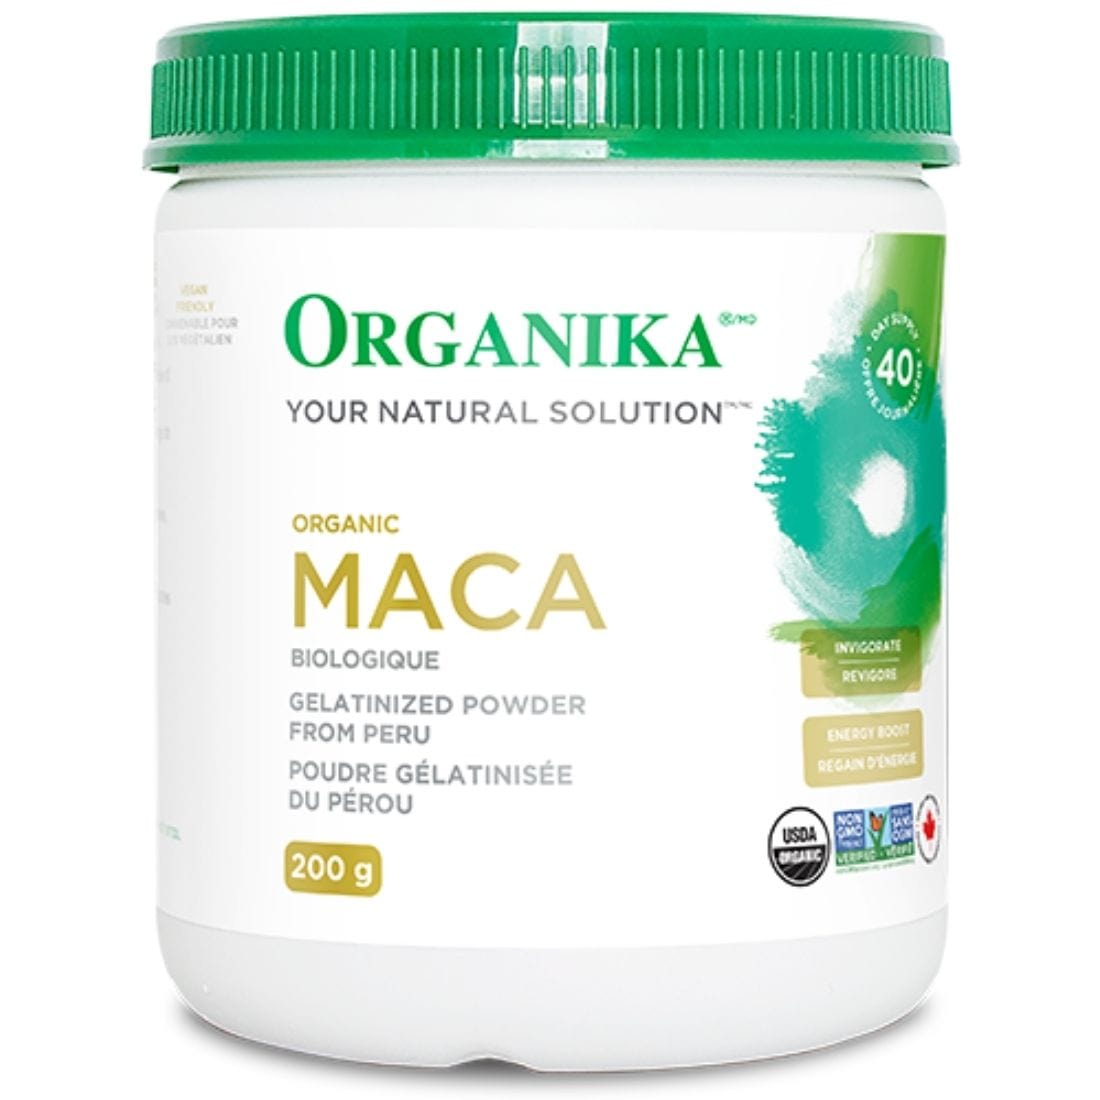 Organika Organic Maca Powder, 100% Natural Gelatinized Peruvian Maca Powder